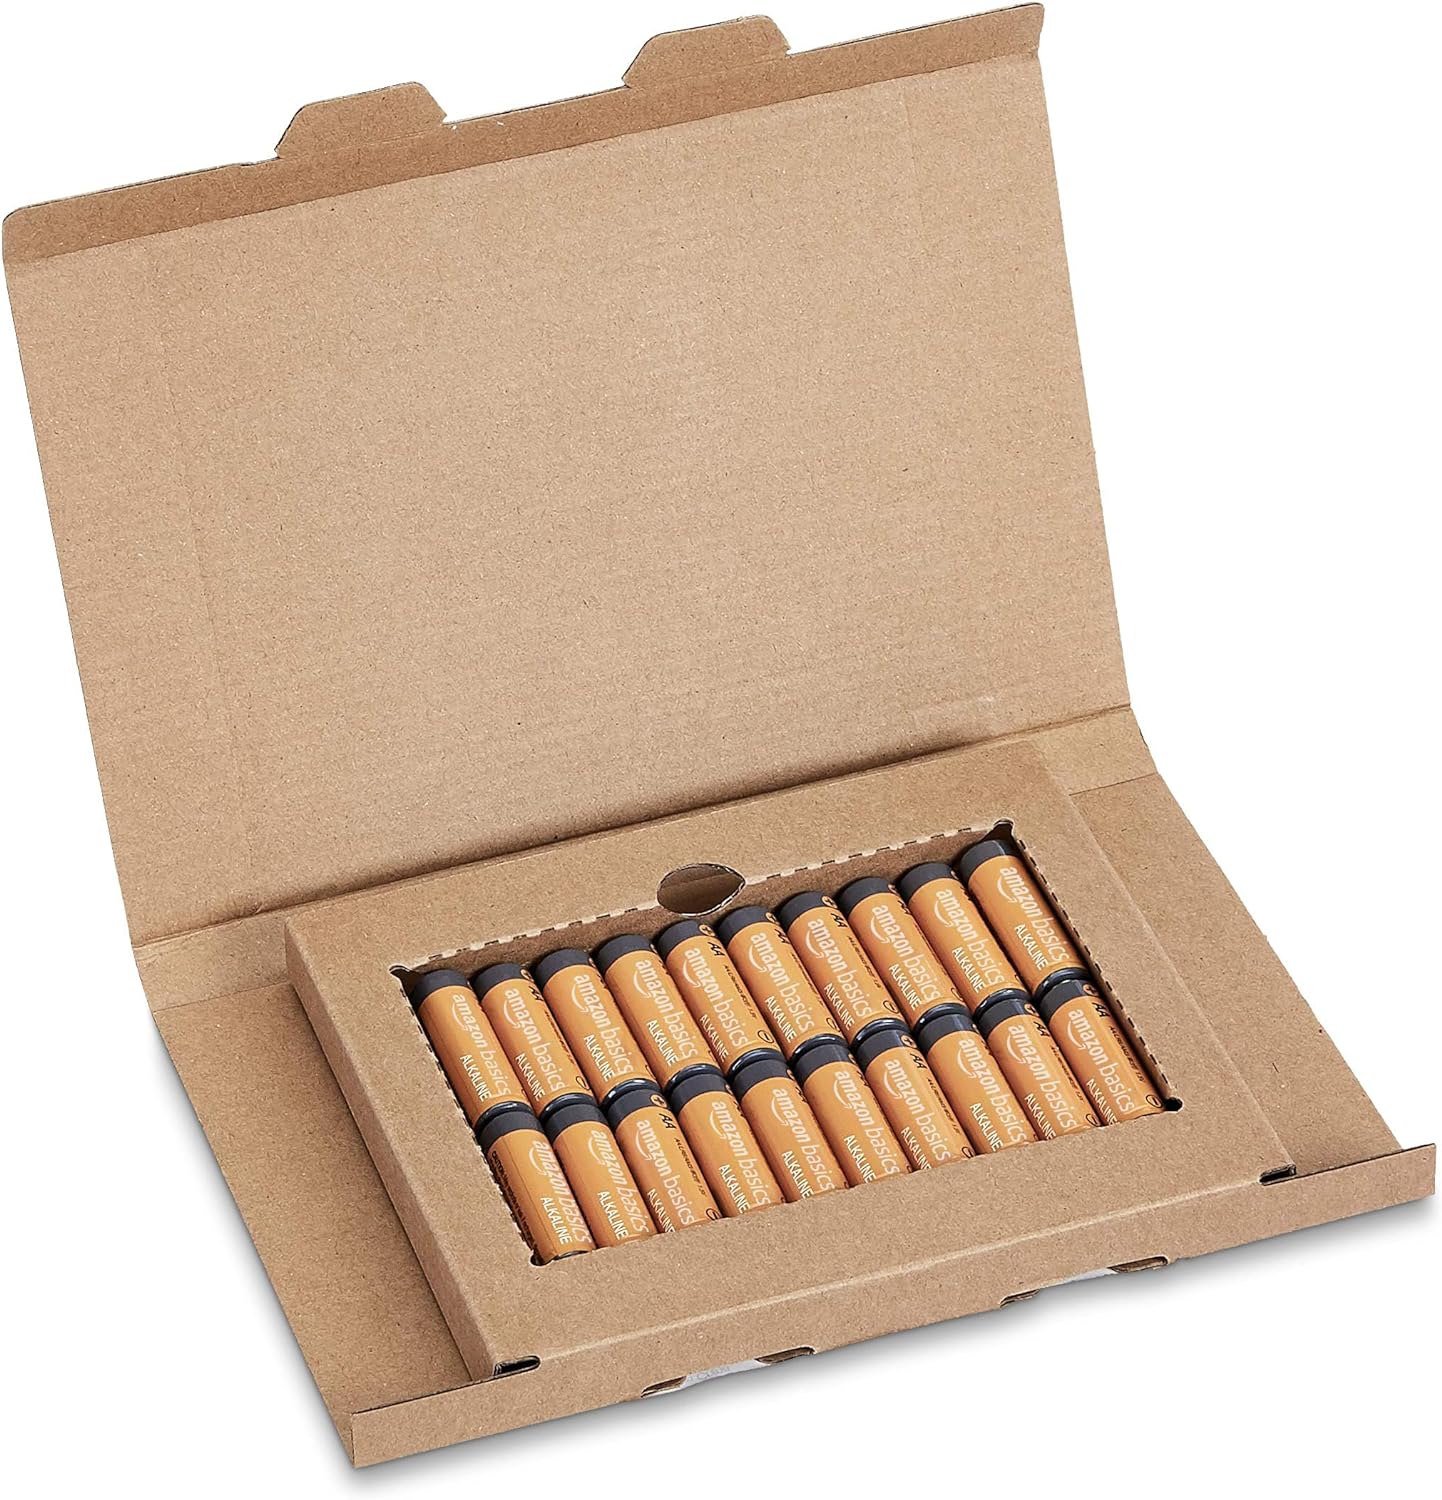 Amazon Basics 20-Pack AA Alkaline High-Performance Batteries, 1.5 Volt, 10-Year Shelf Life